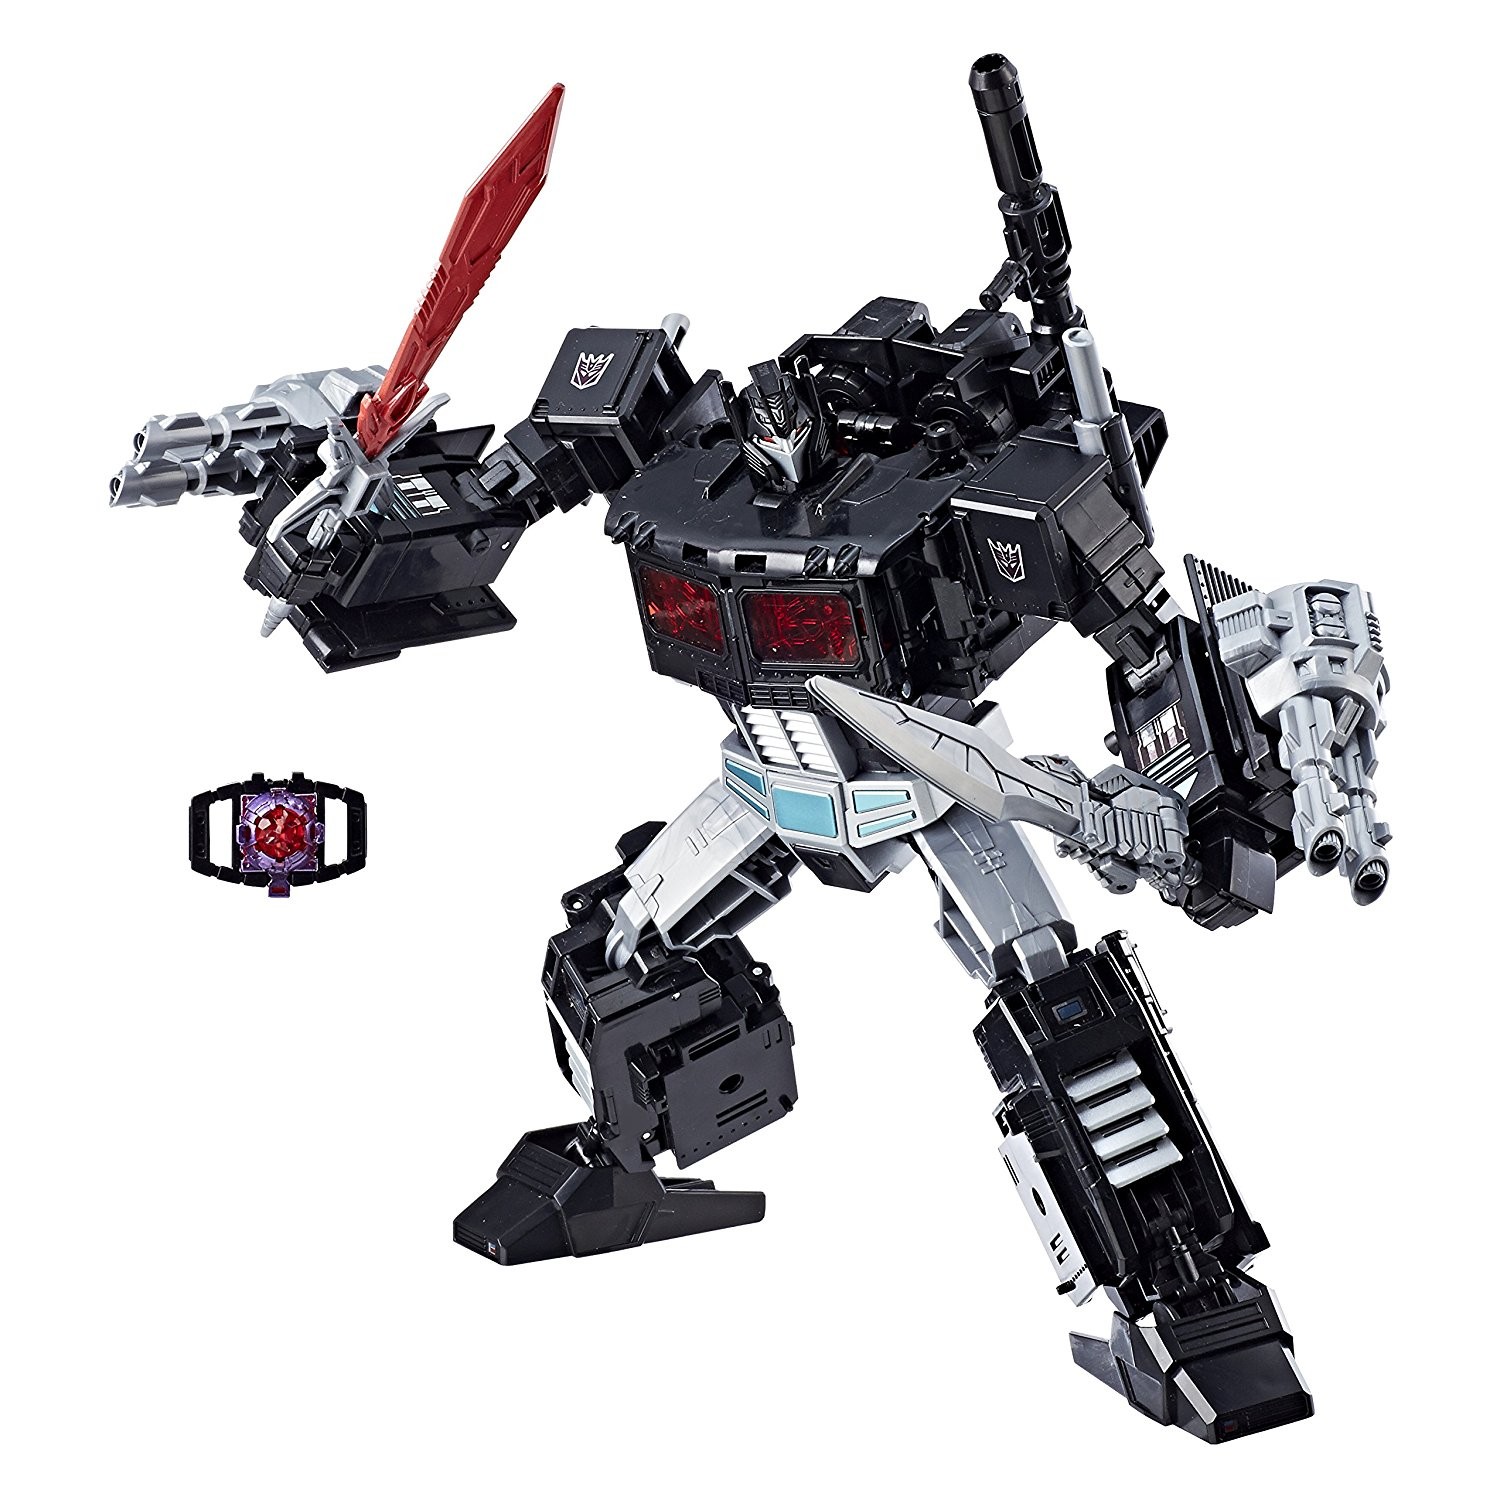 Transformers News: Online Listing for Transformers Power of the Primes Nemesis Pax / Nemesis Prime